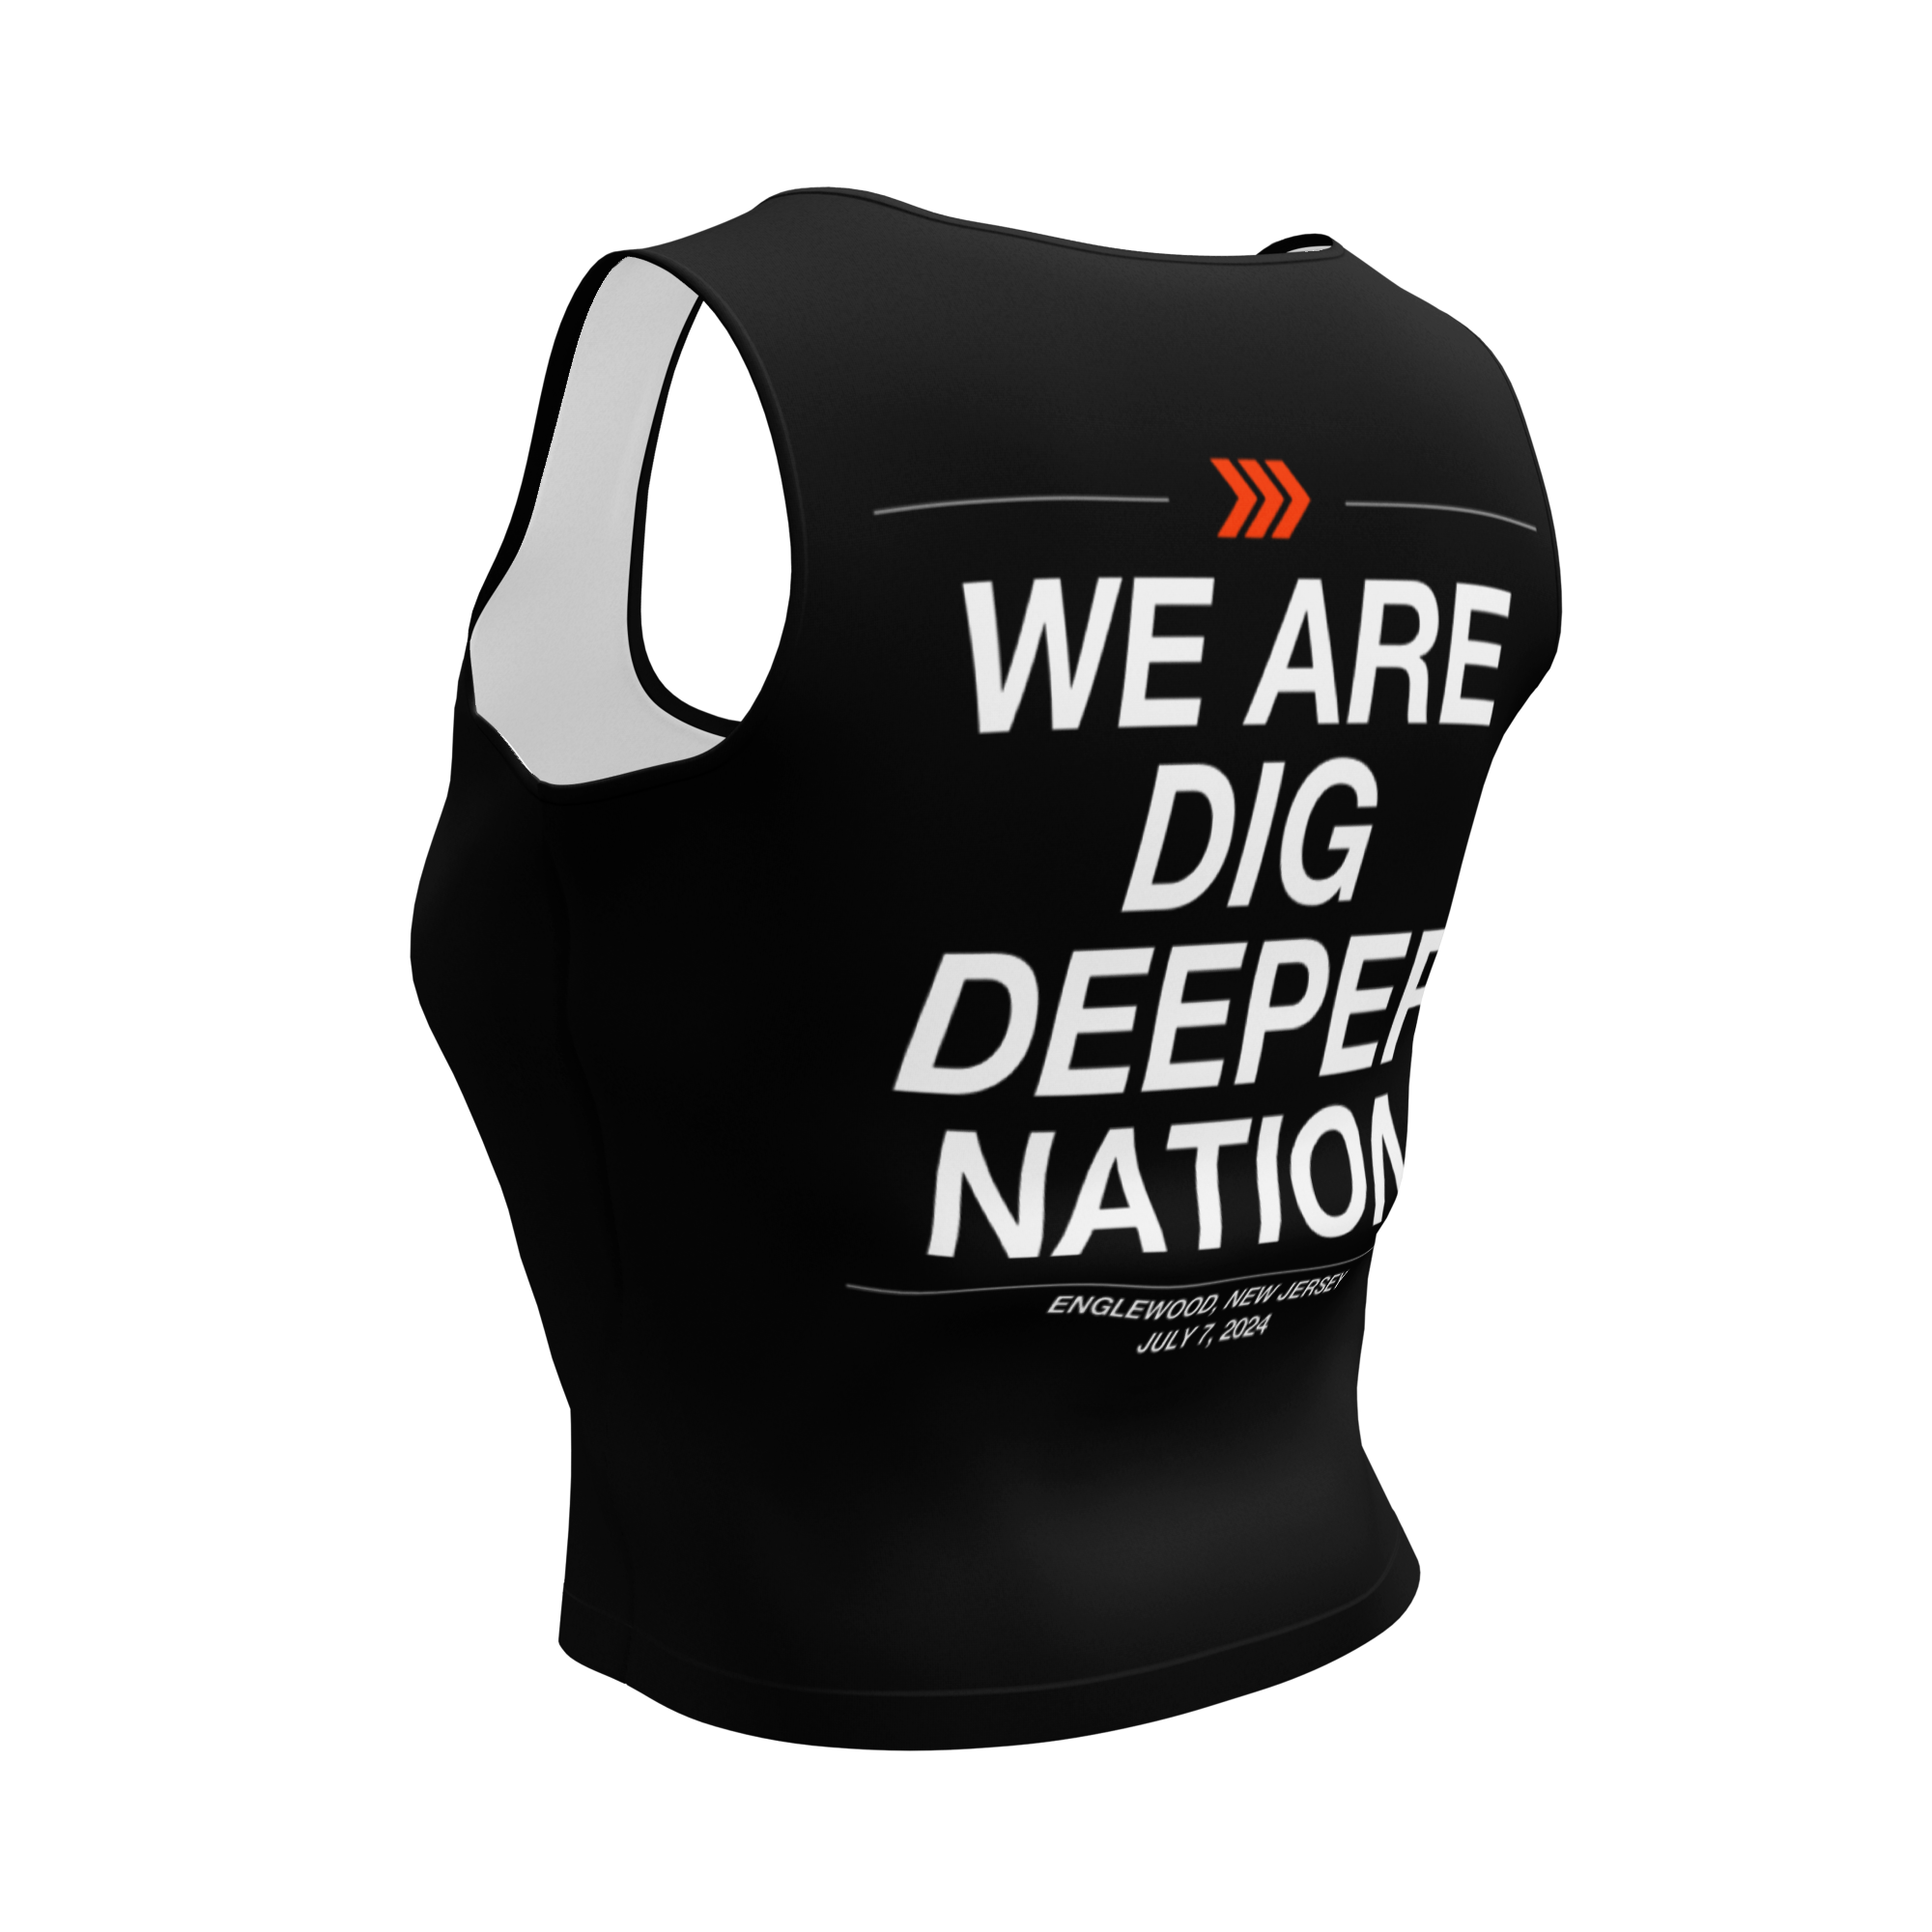 JERSEY - Dig Deeper Nation Live Event Crop Top (1)